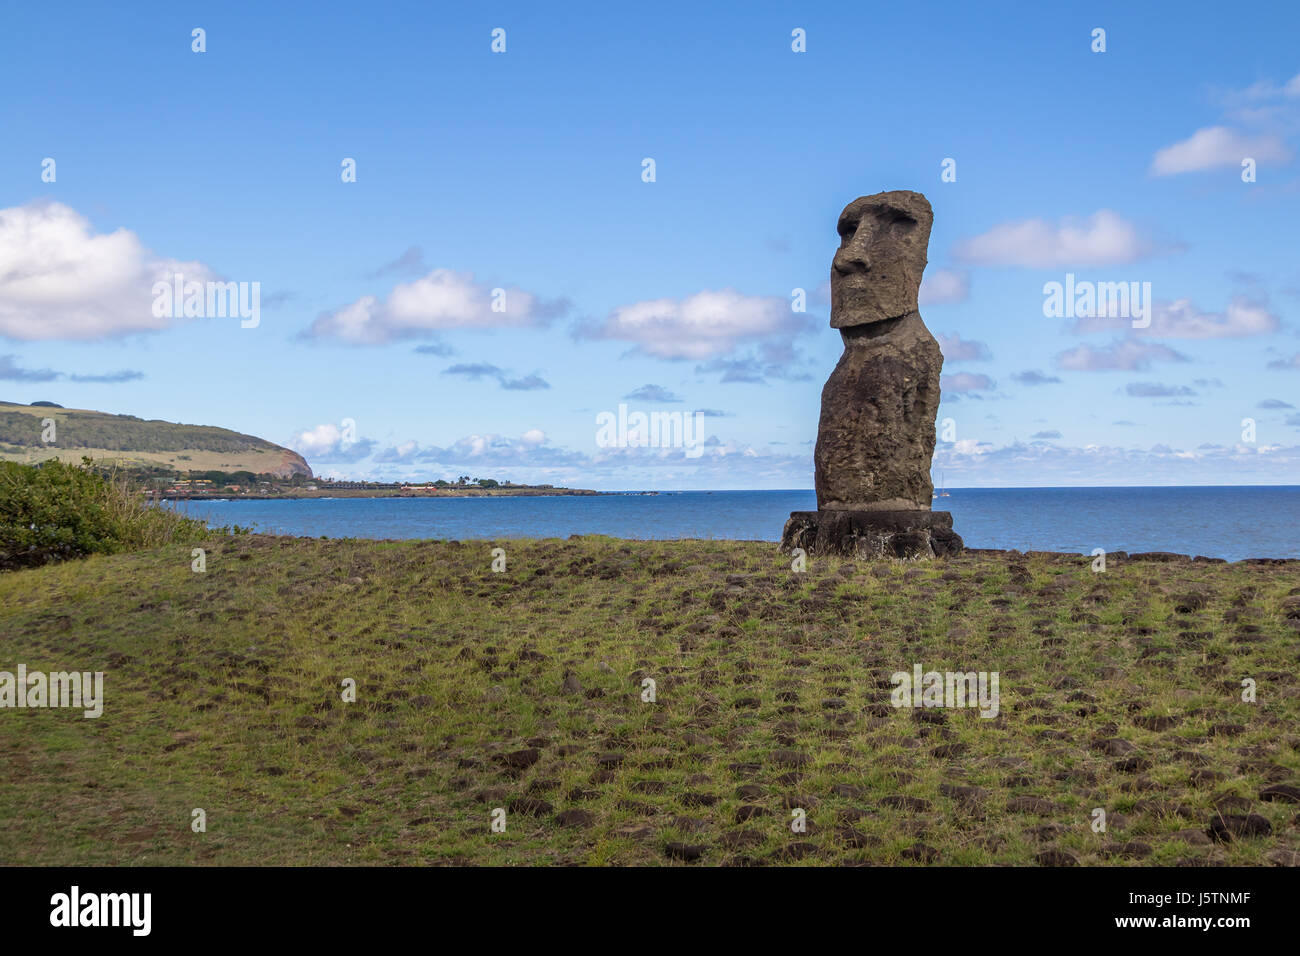 Moai Statue of Ahu Akapu - Easter Island, Chile Stock Photo